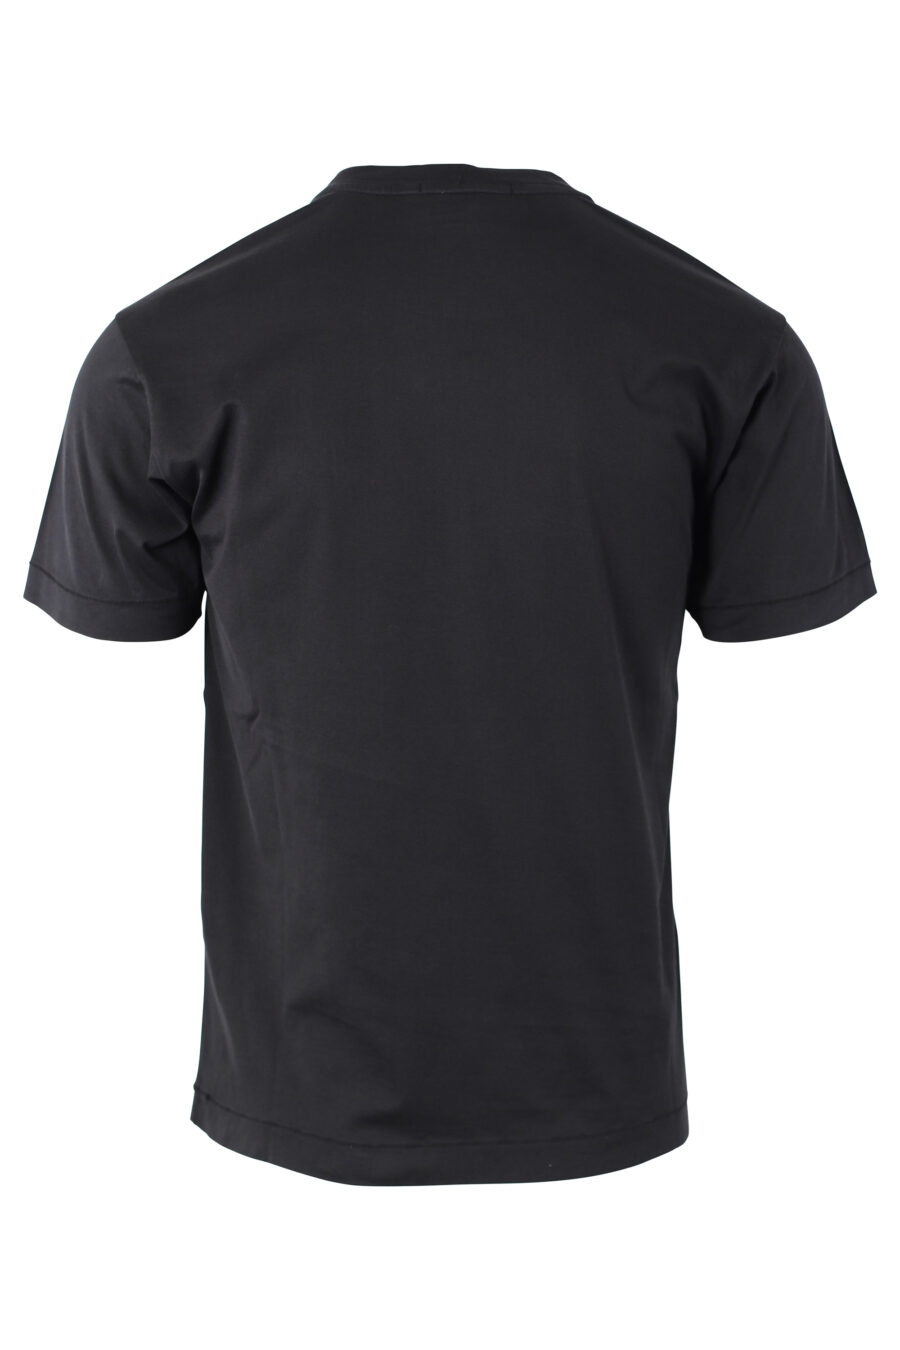 T-shirt noir avec mini patch logo - IMG 1134